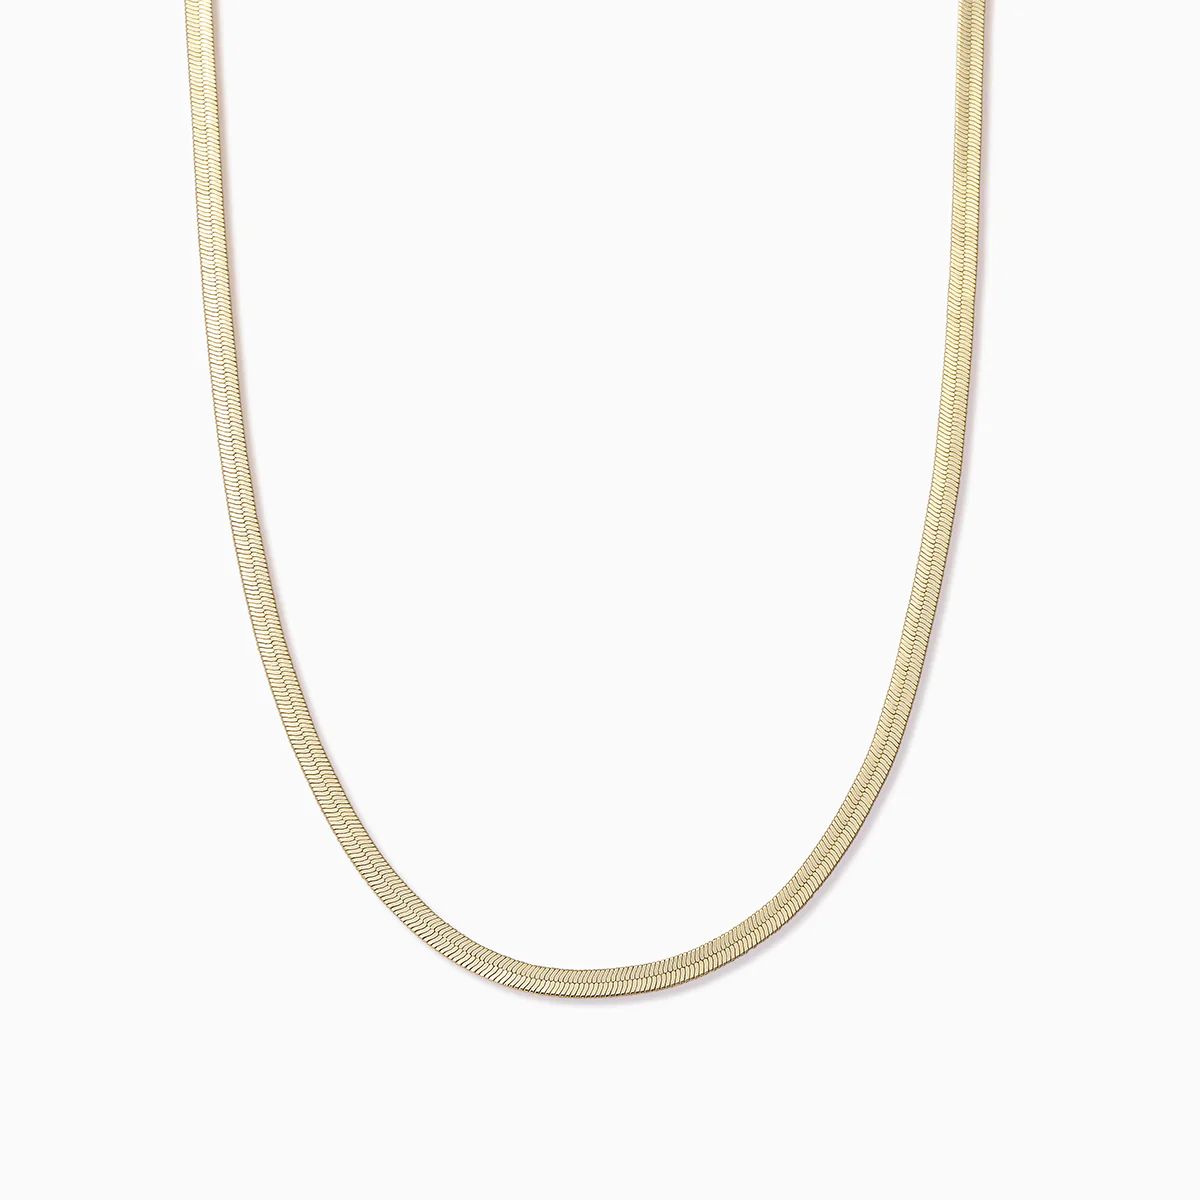 Horizon Herringbone Chain Necklace in Gold | Uncommon James | Uncommon James